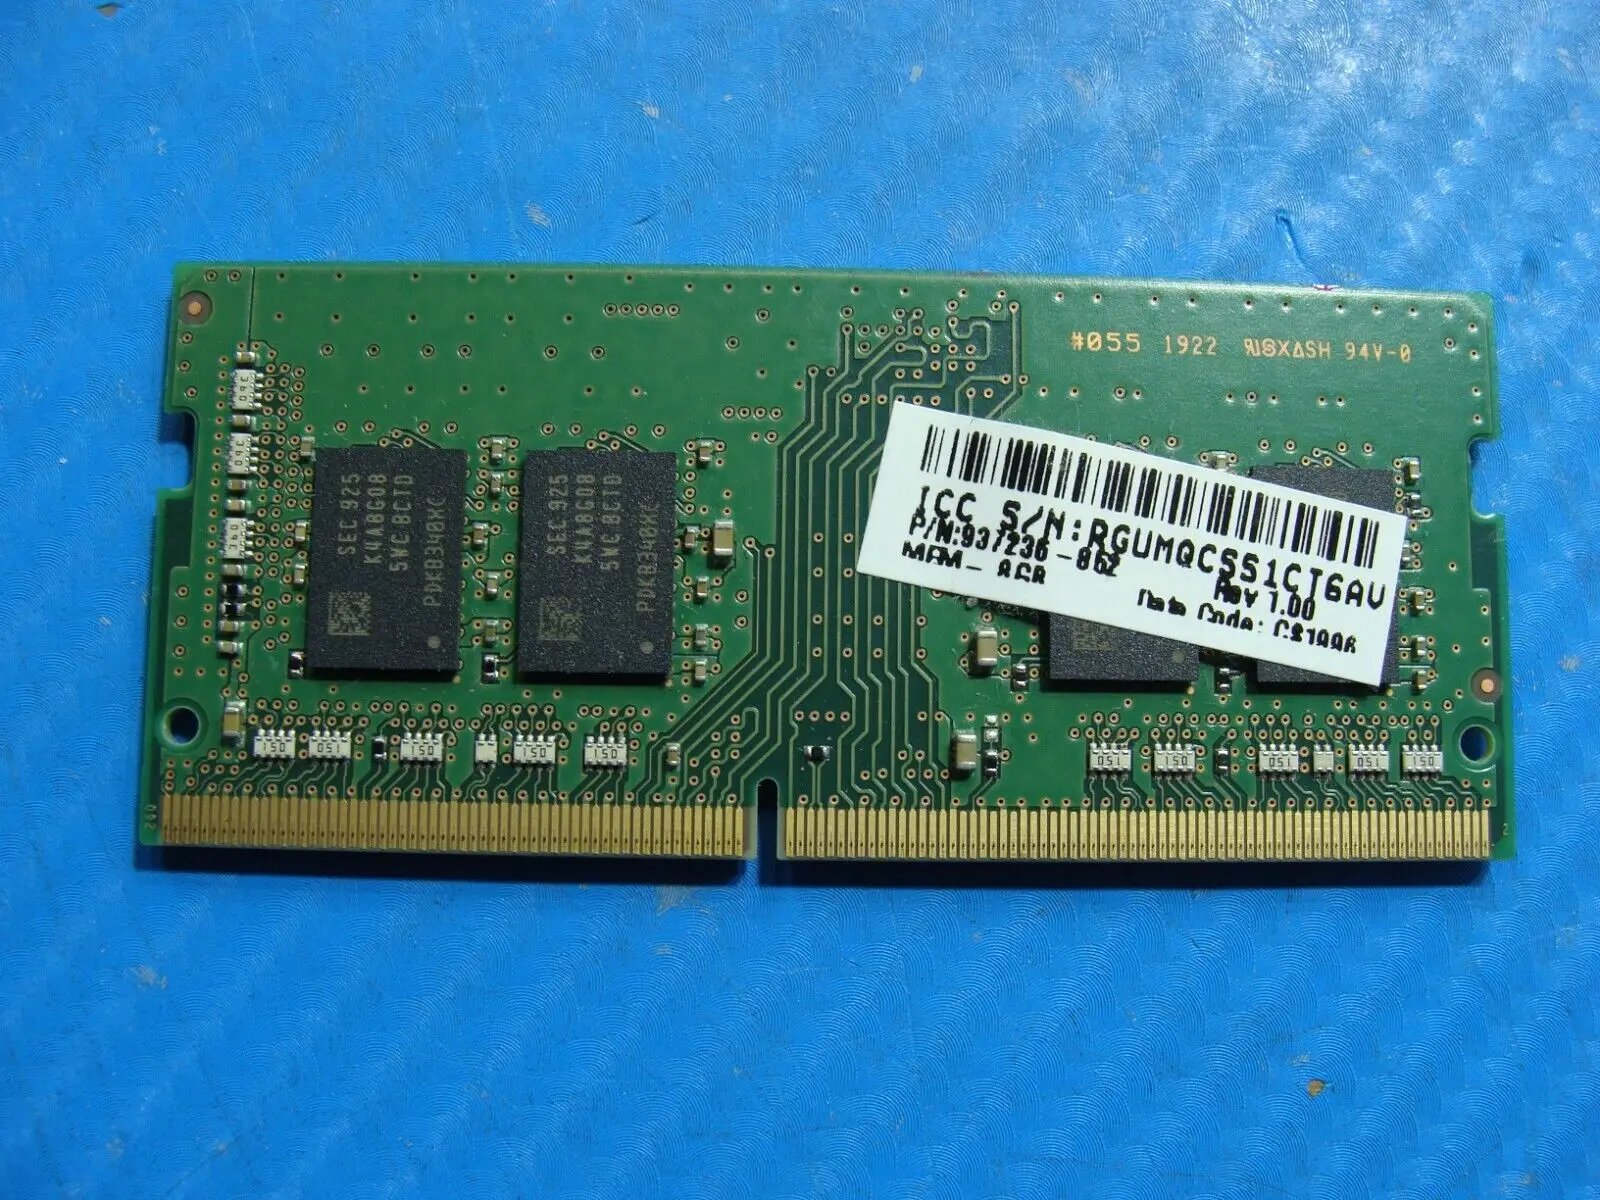 HP 840 G6 Samsung 8GB 1Rx8 PC4-2666V Memory RAM SO-DIMM M471A1K43CB1-CTD